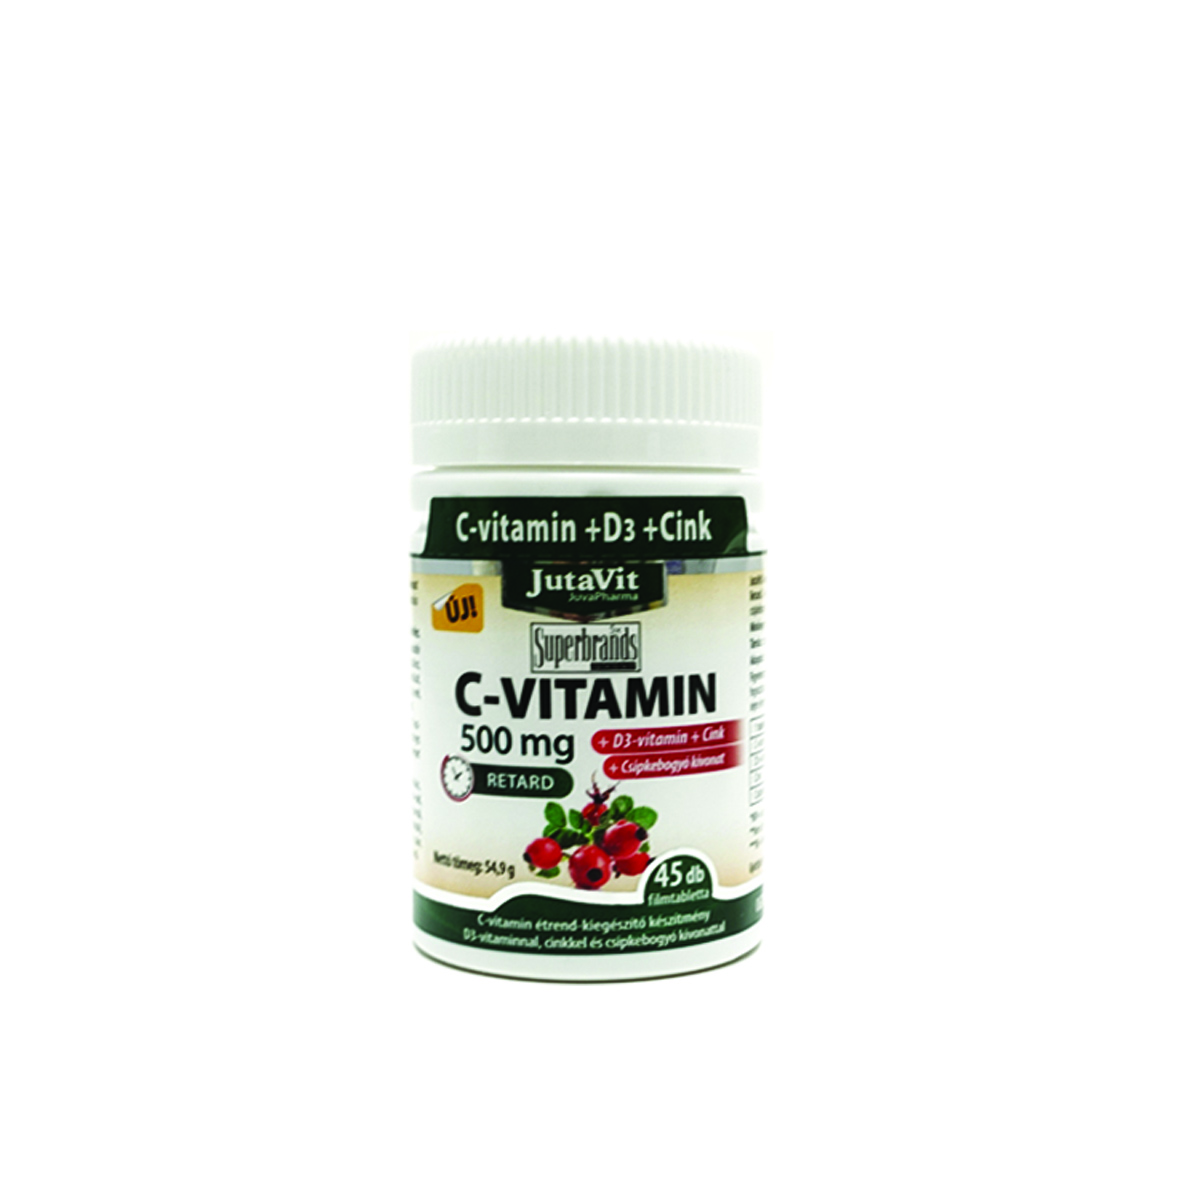 JutaVit C-vitamin 500mg + csipkebogyó + D3 + Cink 45db